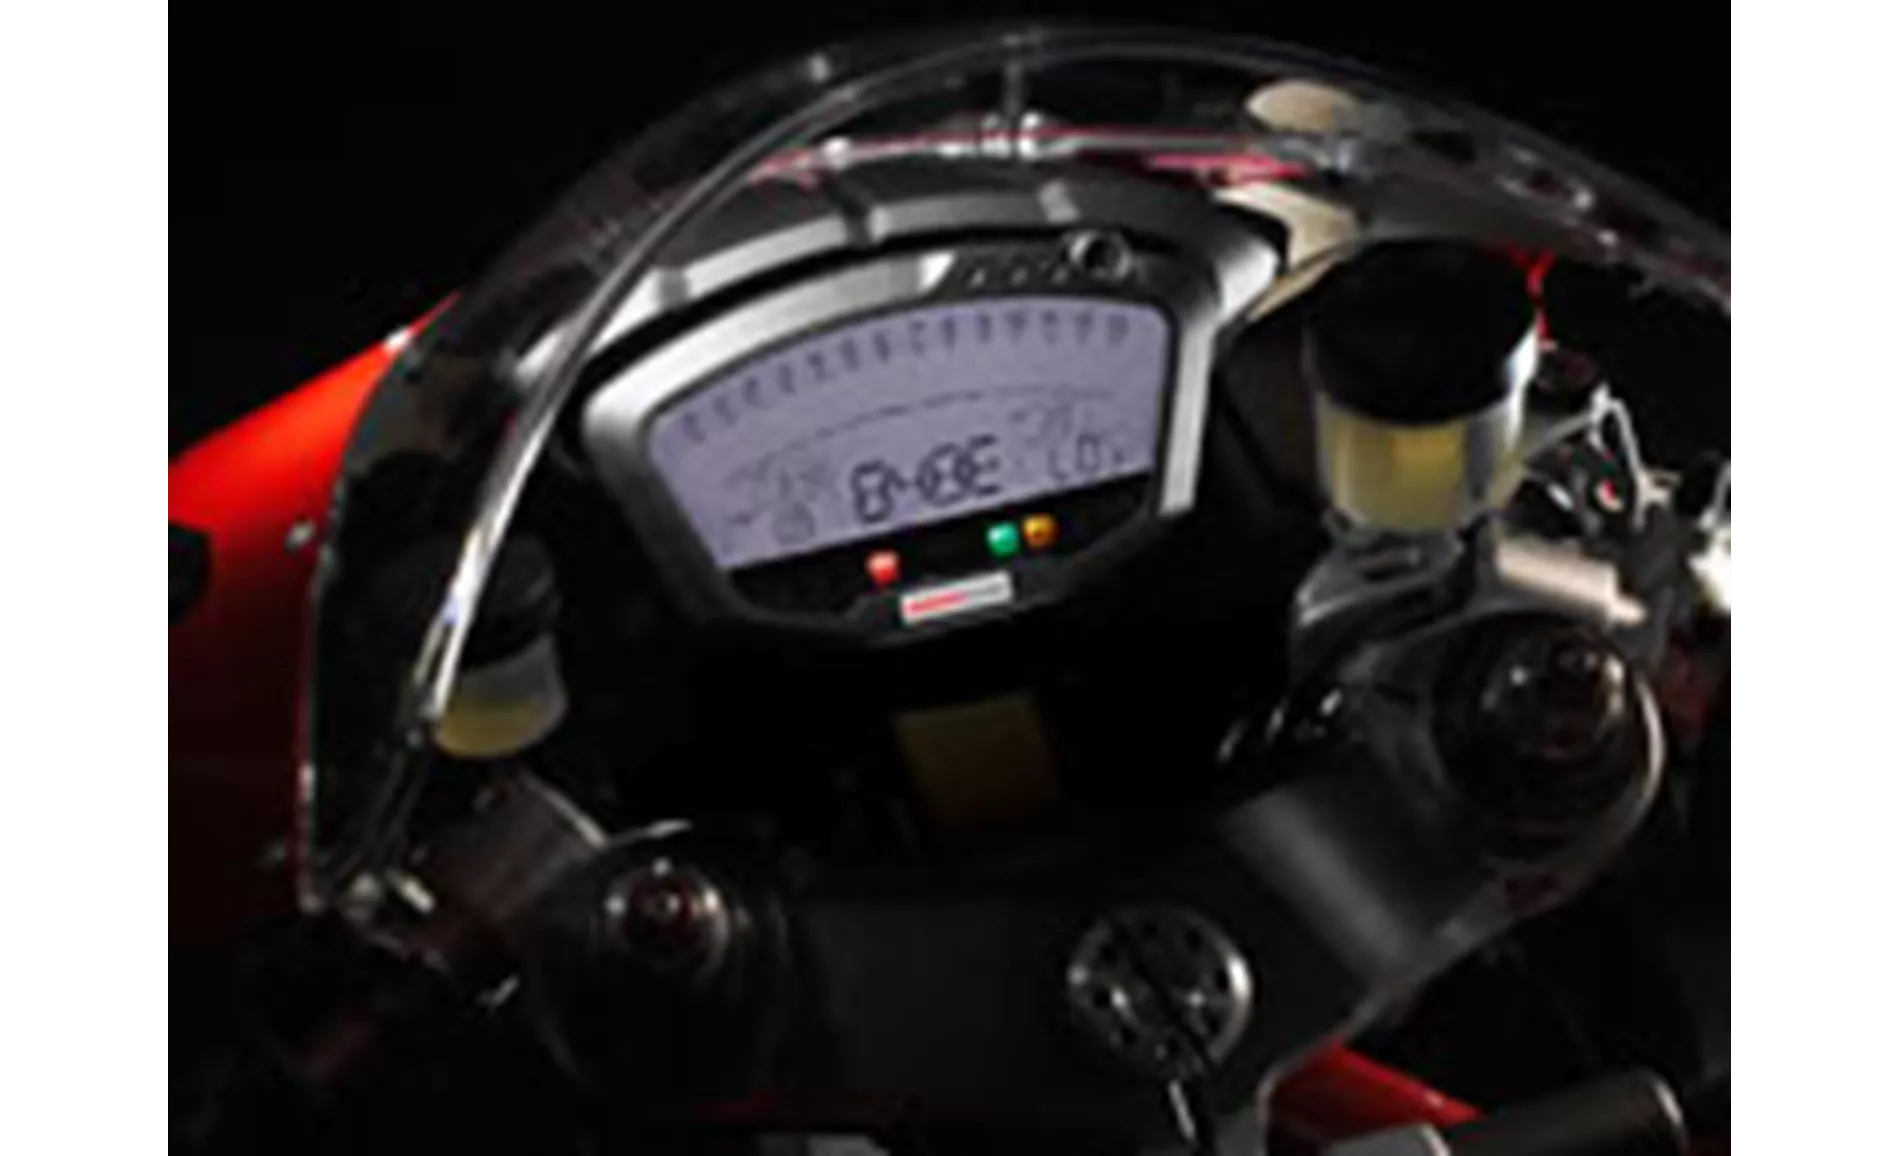 Ducati 848 EVO 2012